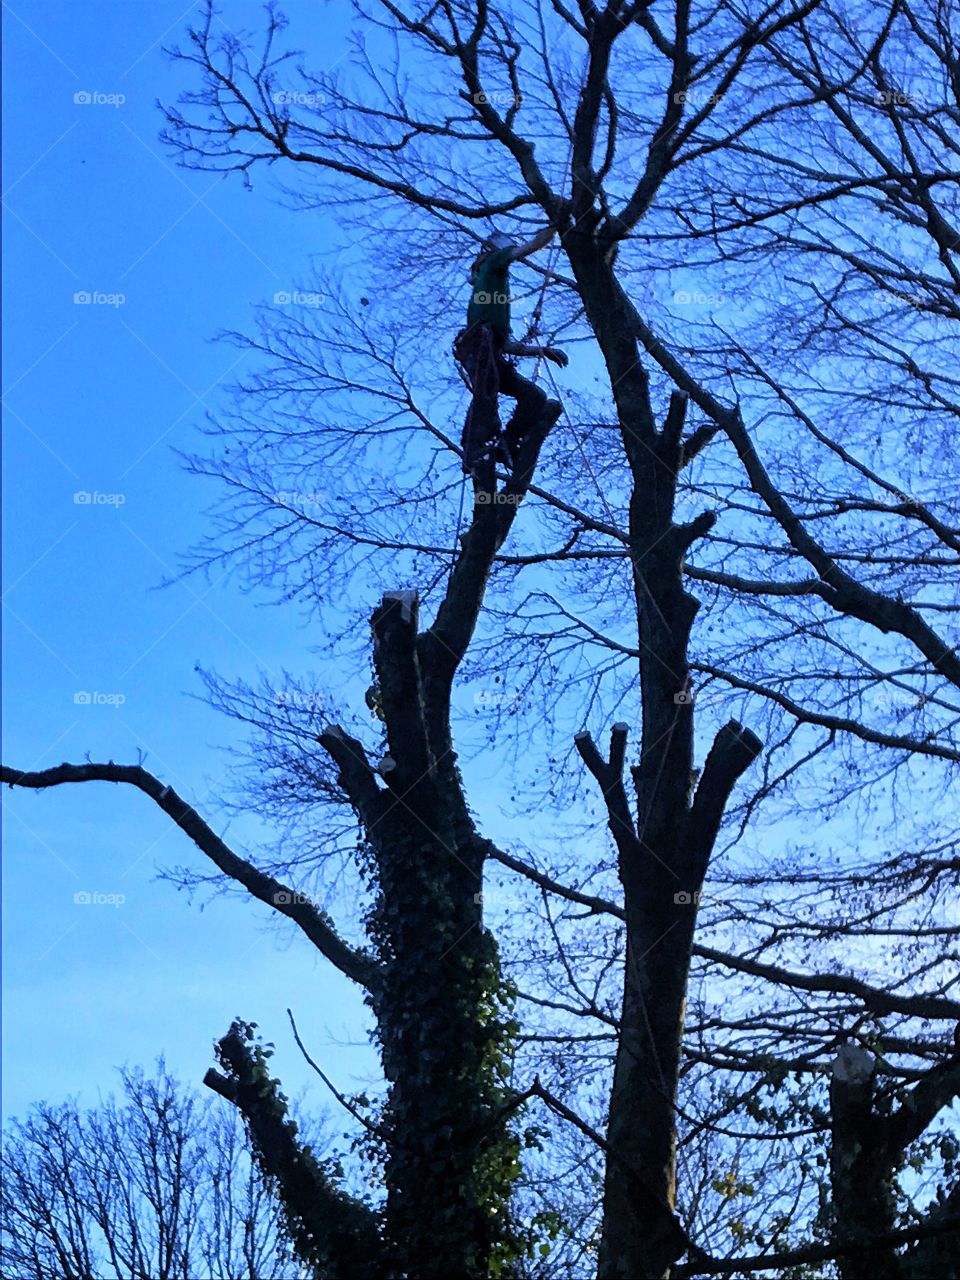 Tree surgeon climbing 